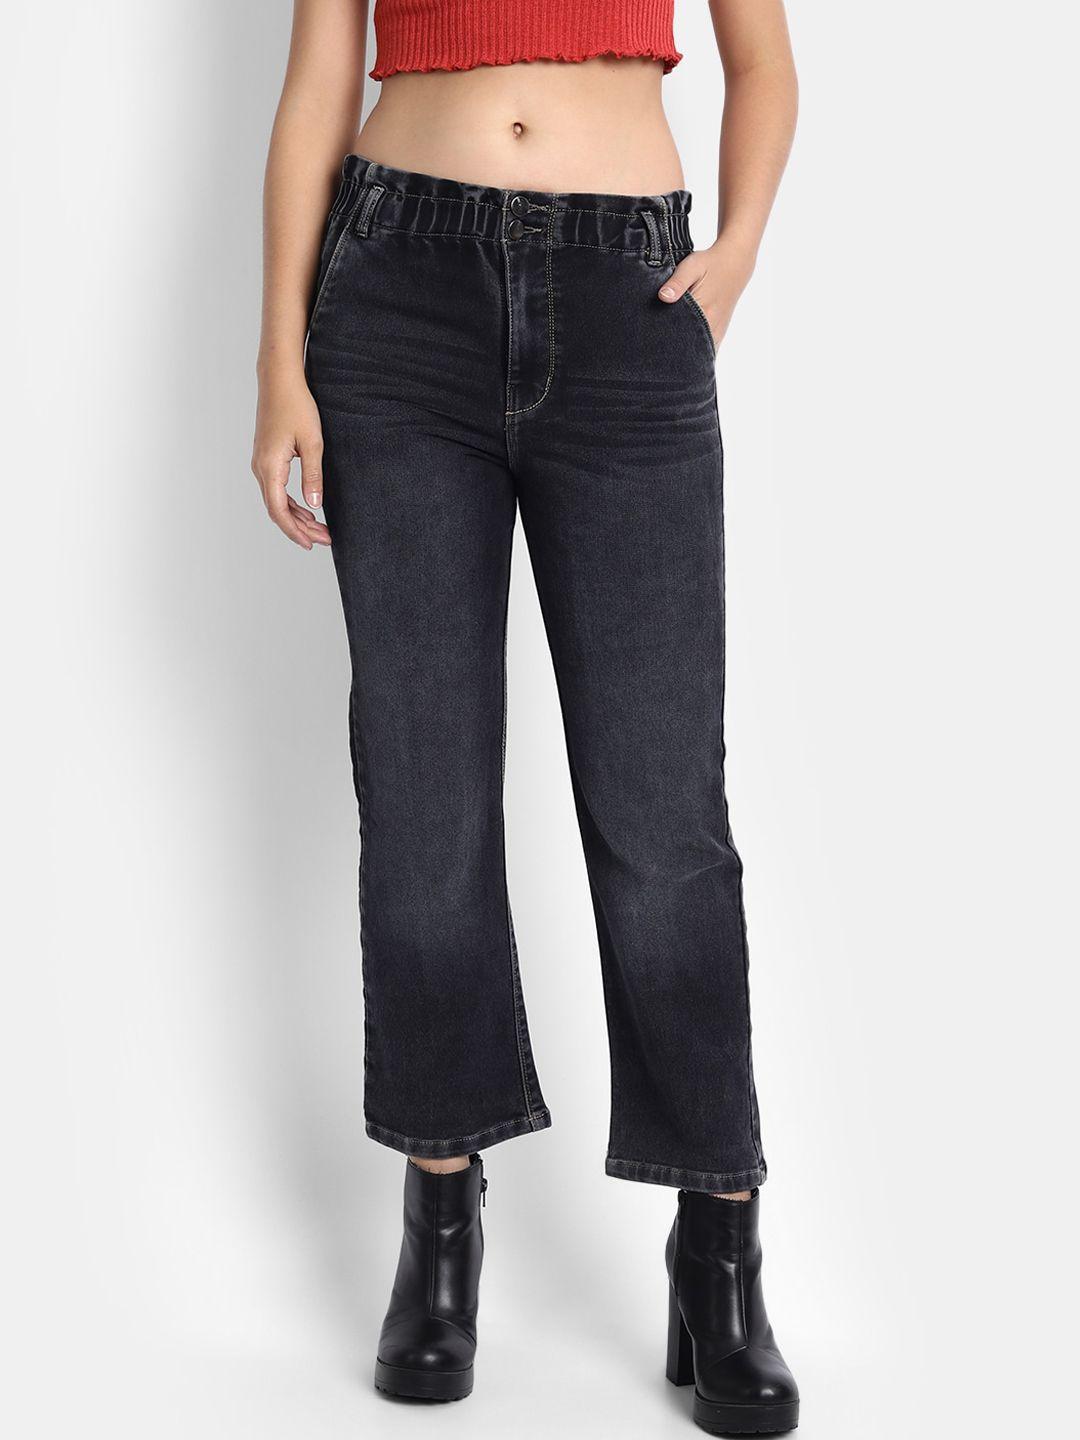 broadstar-women-blue-jean-straight-fit-light-fade-stretchable-jeans